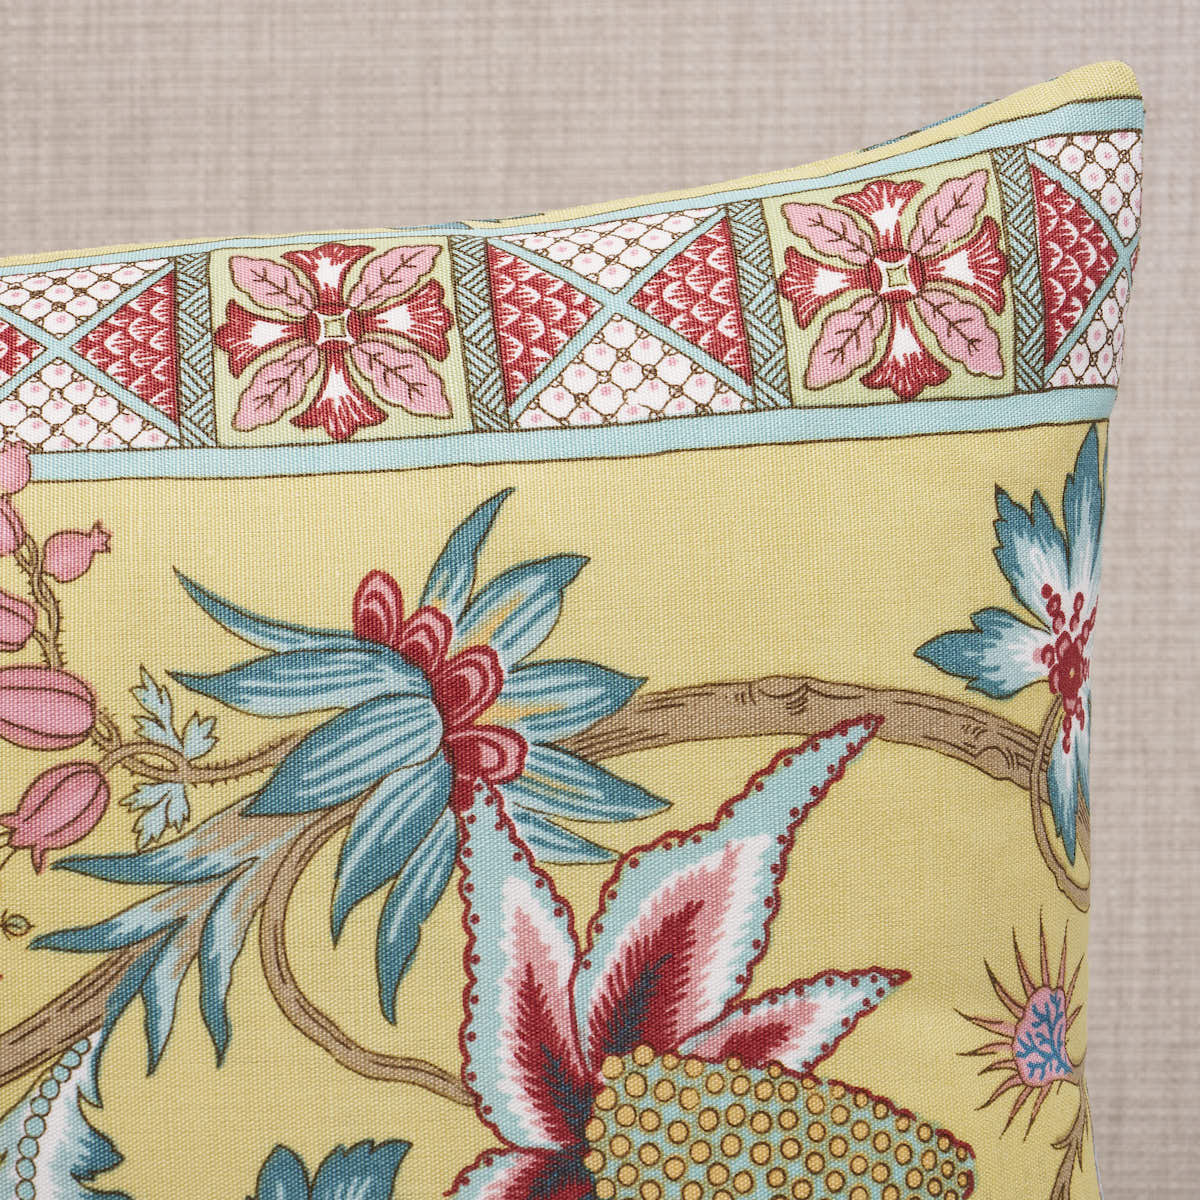 Purchase So18186119 | Bailey Botanical Pillow, Gold - Schumacher Pillows